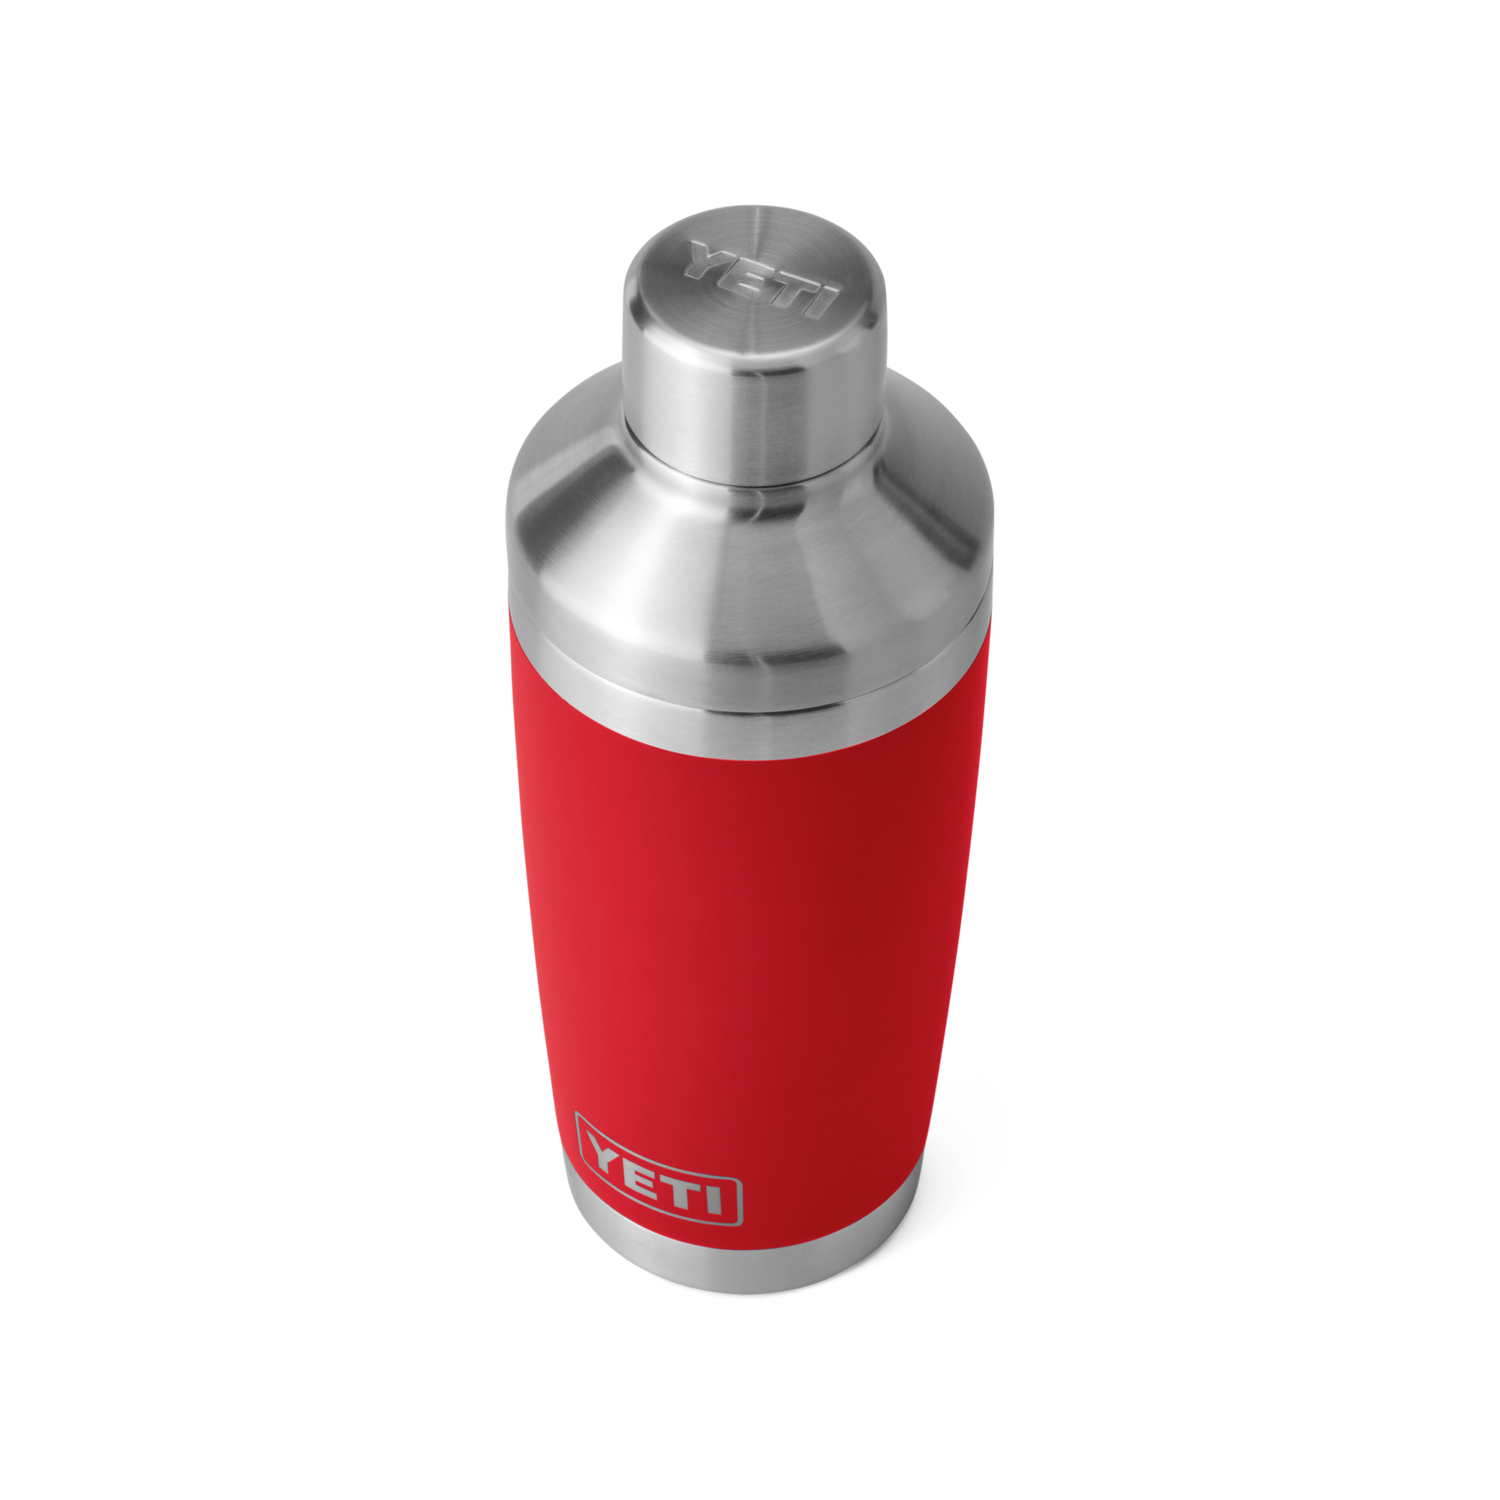 YETI Rambler® Shaker à Cocktail de 20 oz (591 ml) Rescue Red